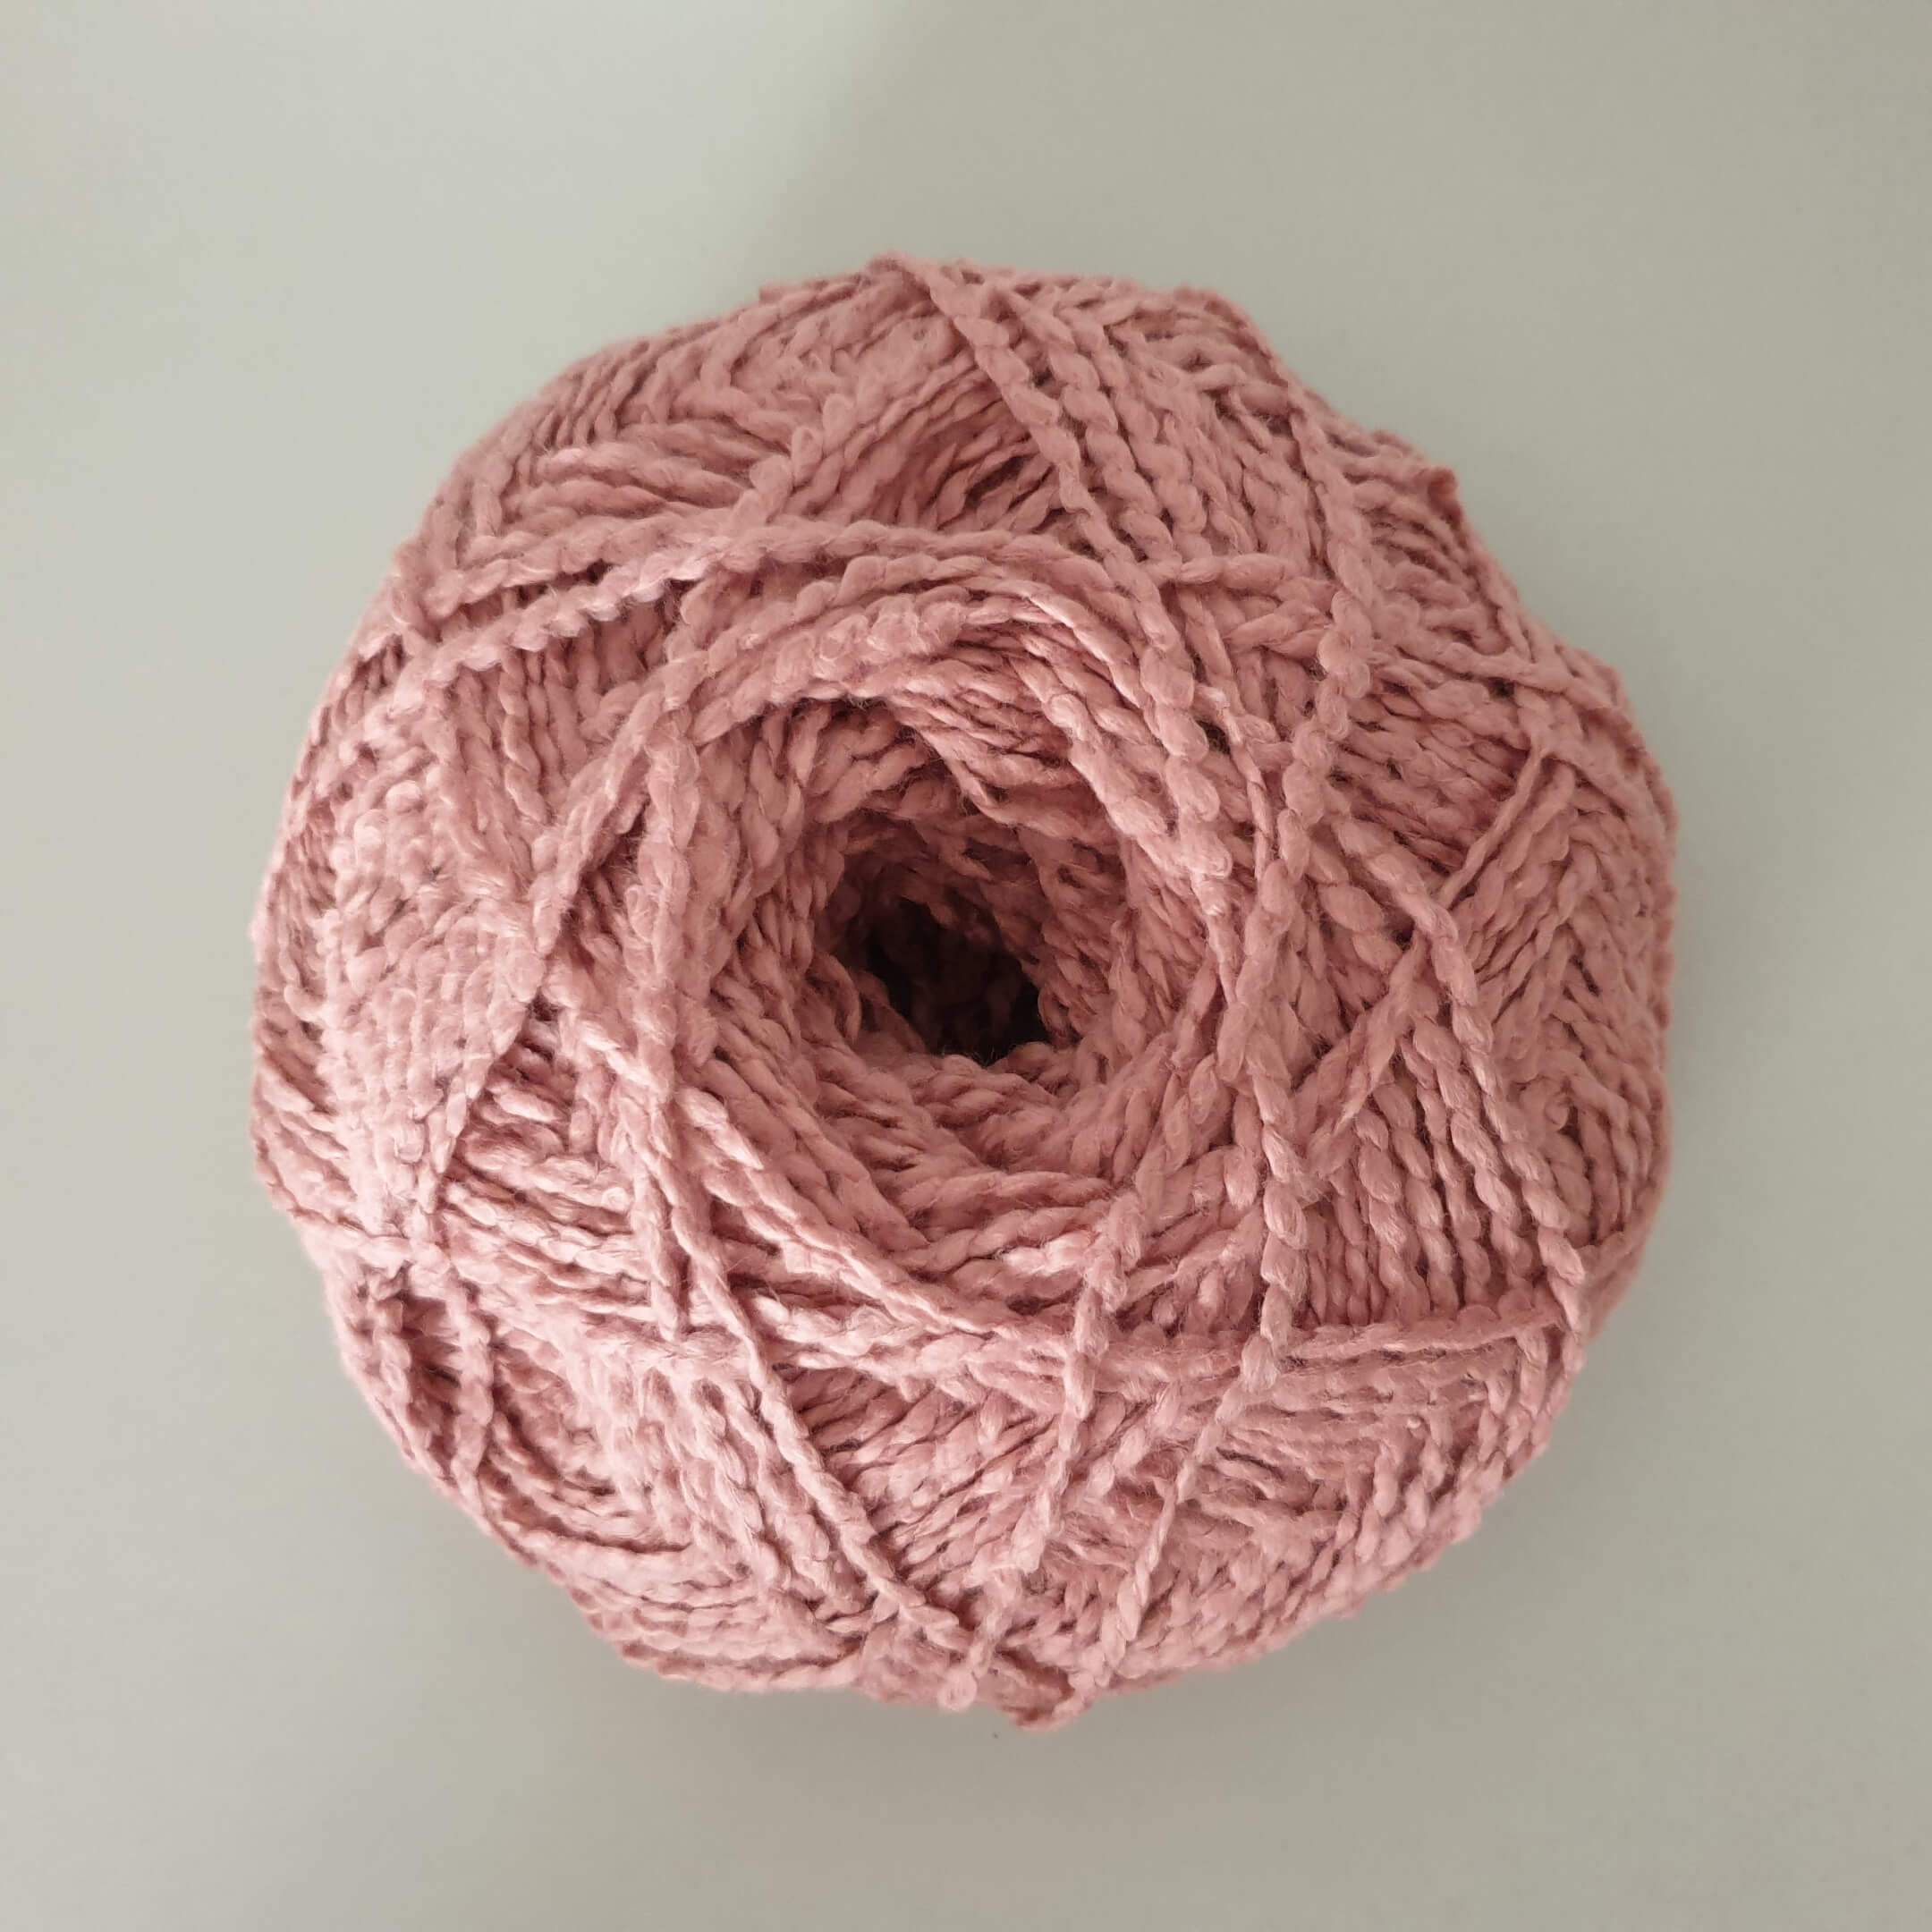 Cotton Candy Wolle - Dusty Rose - Dunkelrosa - 100gr - Effektwolle -CotCandyDunkelrosa - Gokrea.com